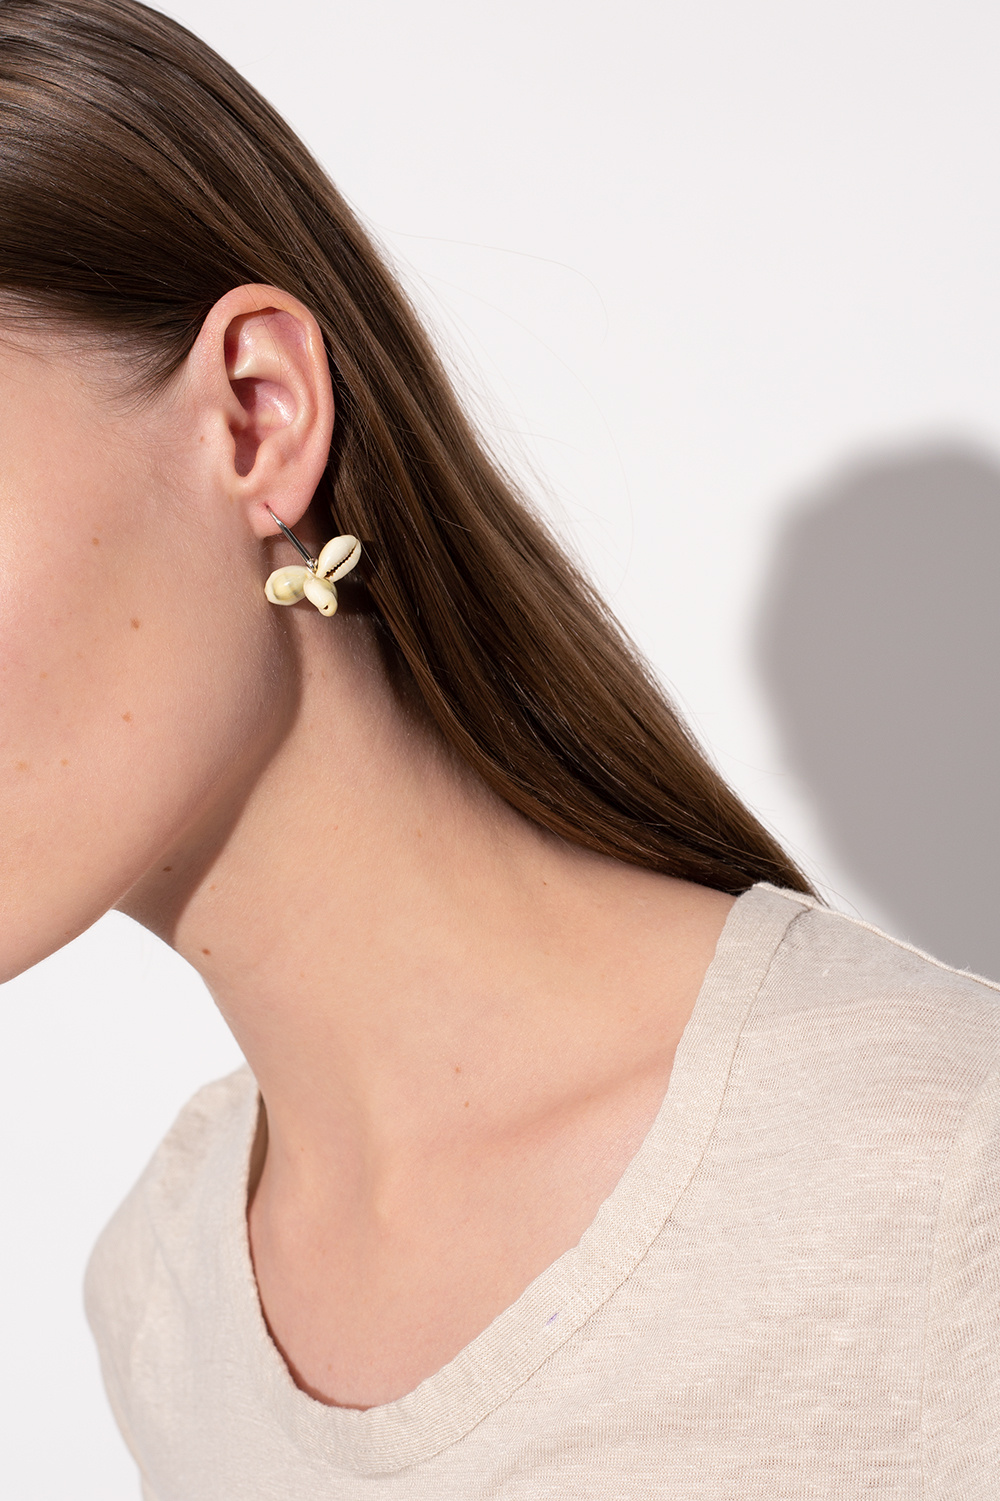 Isabel Marant ‘Cauris Flower’ earrings